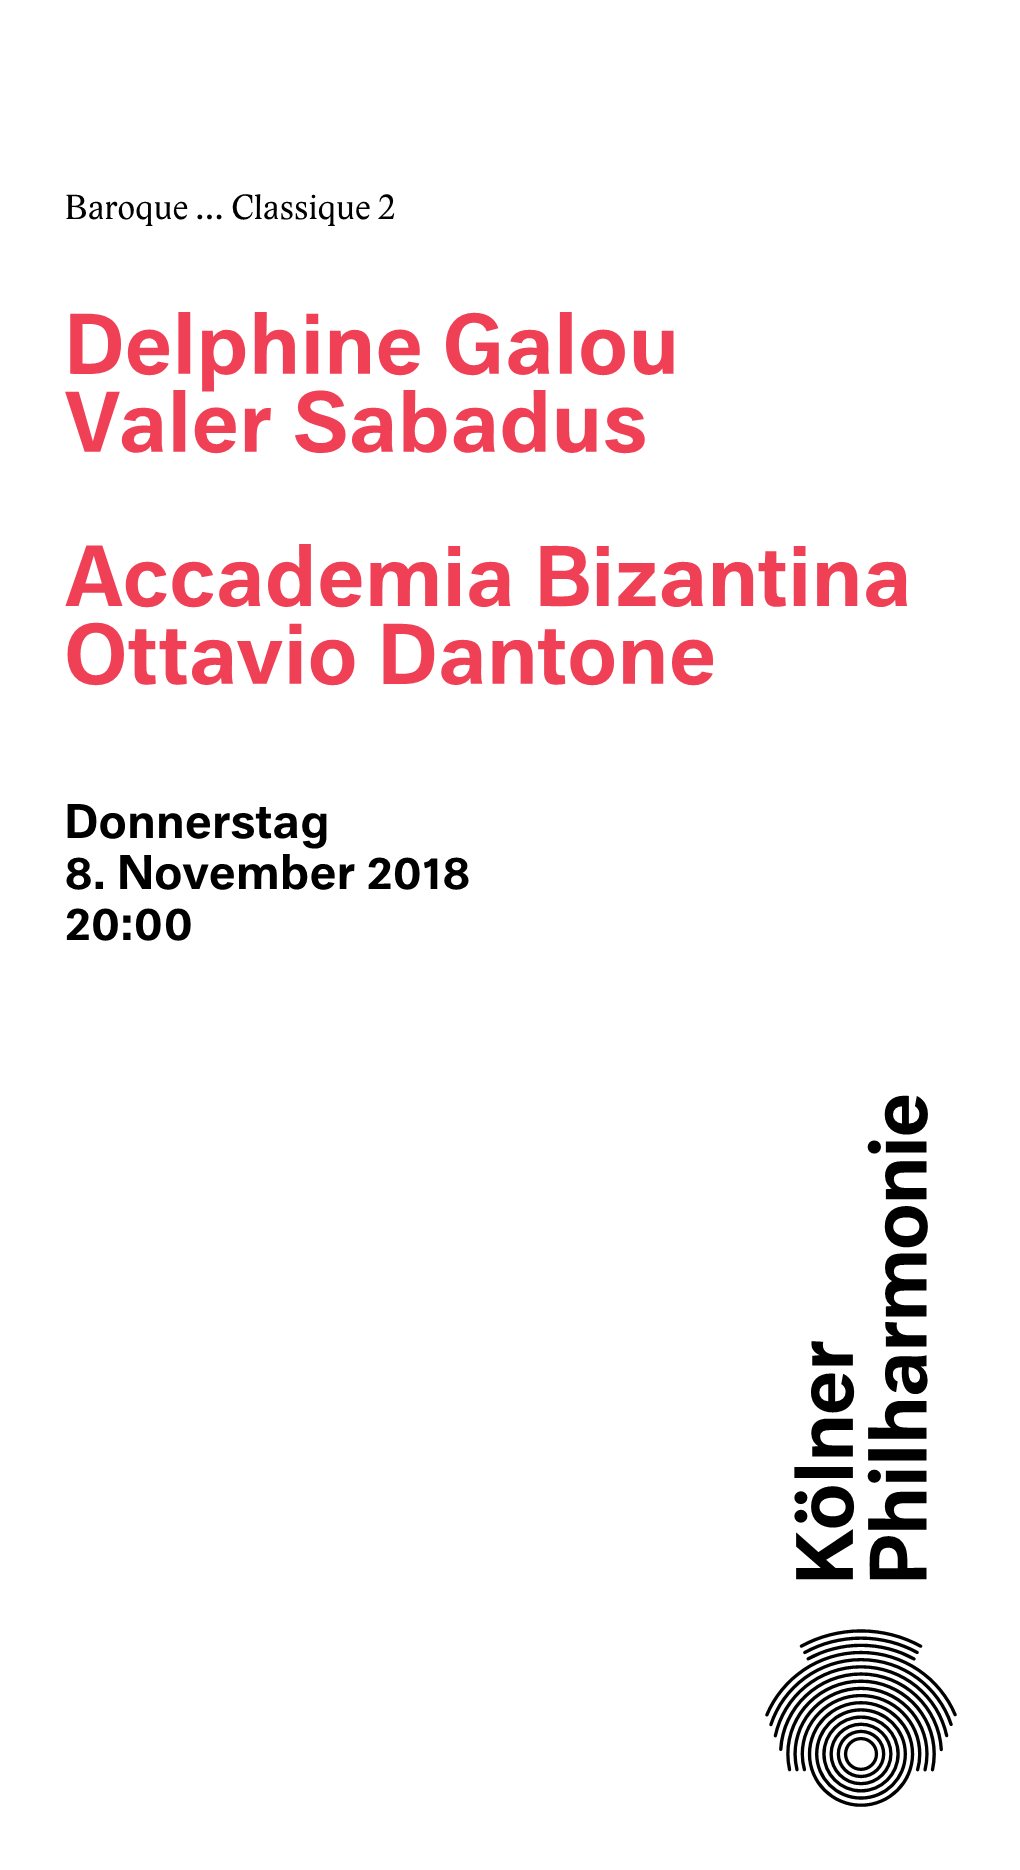 Delphine Galou Valer Sabadus Accademia Bizantina Ottavio Dantone